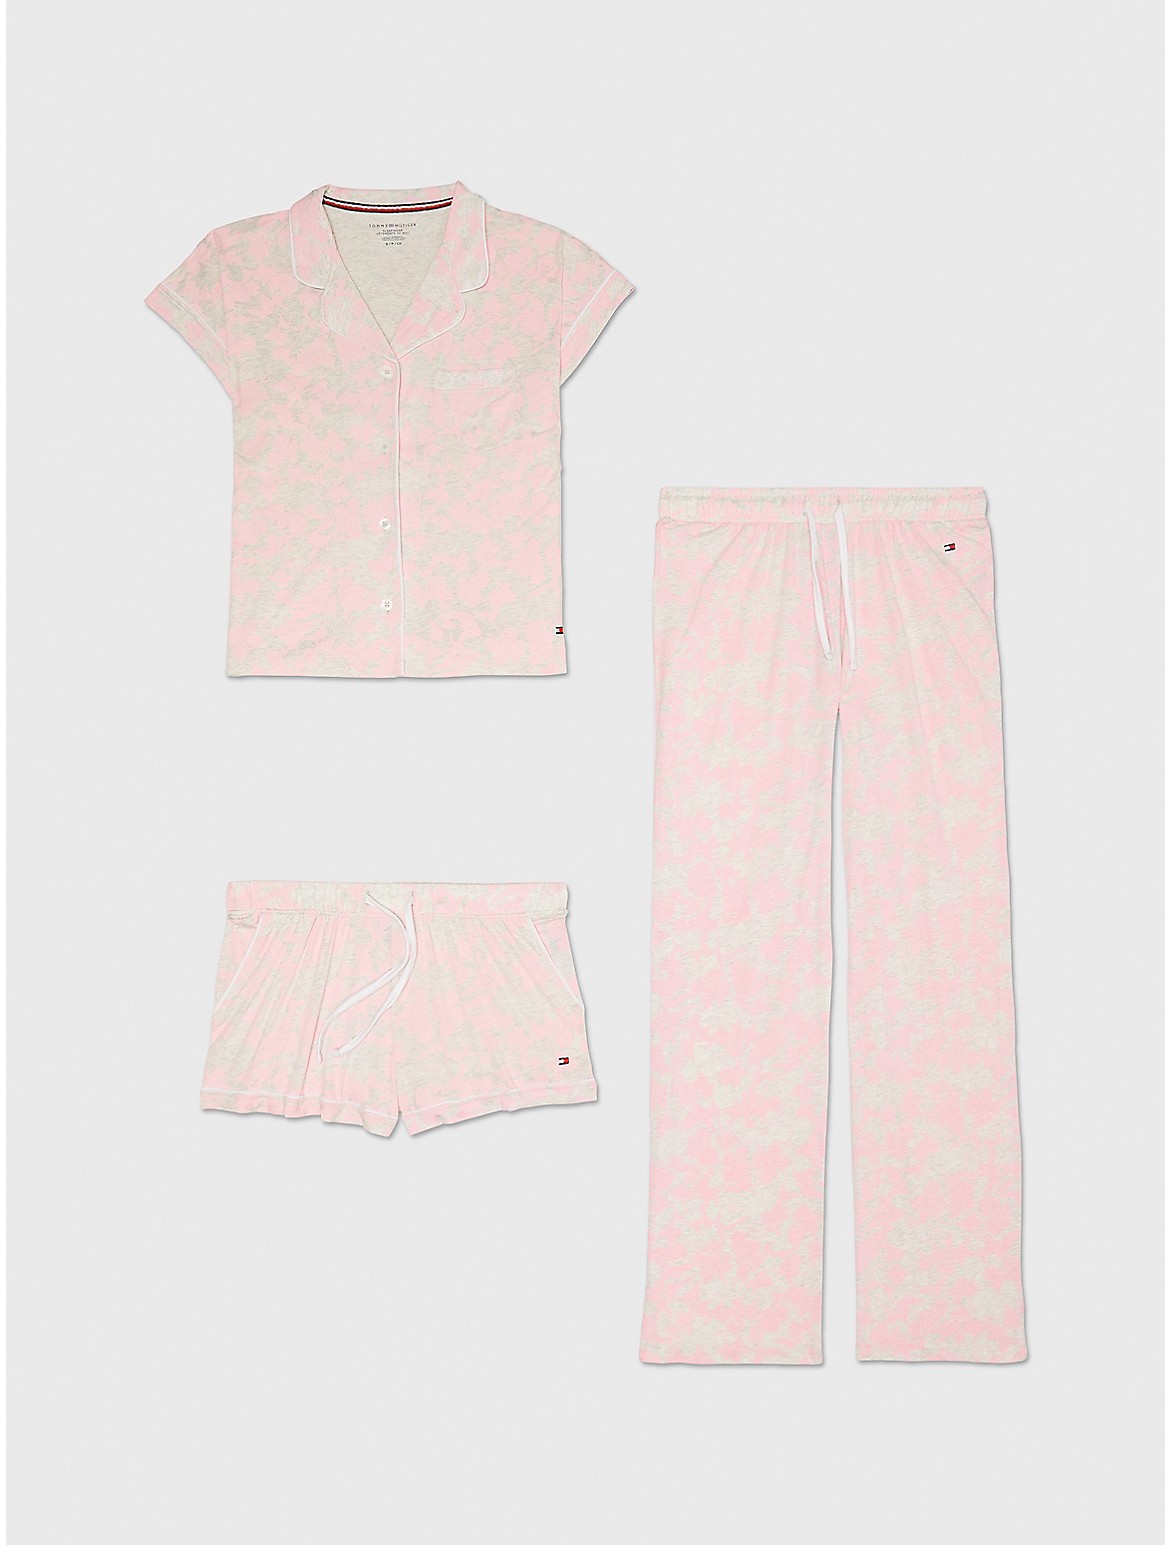 Tommy Hilfiger Women's Floral Sleep Set - Pink - XL